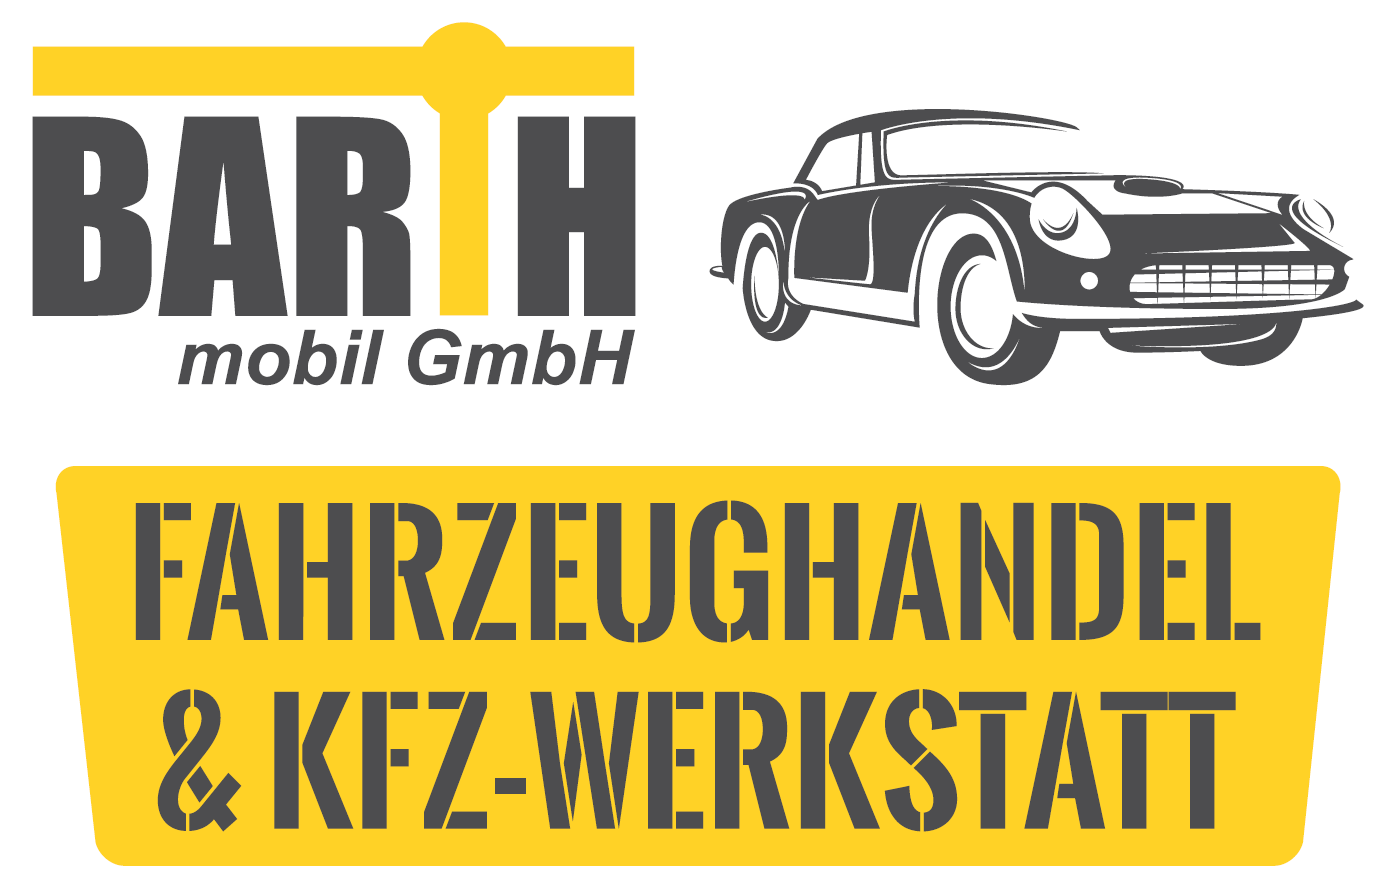 BARTH Mobil GmbH